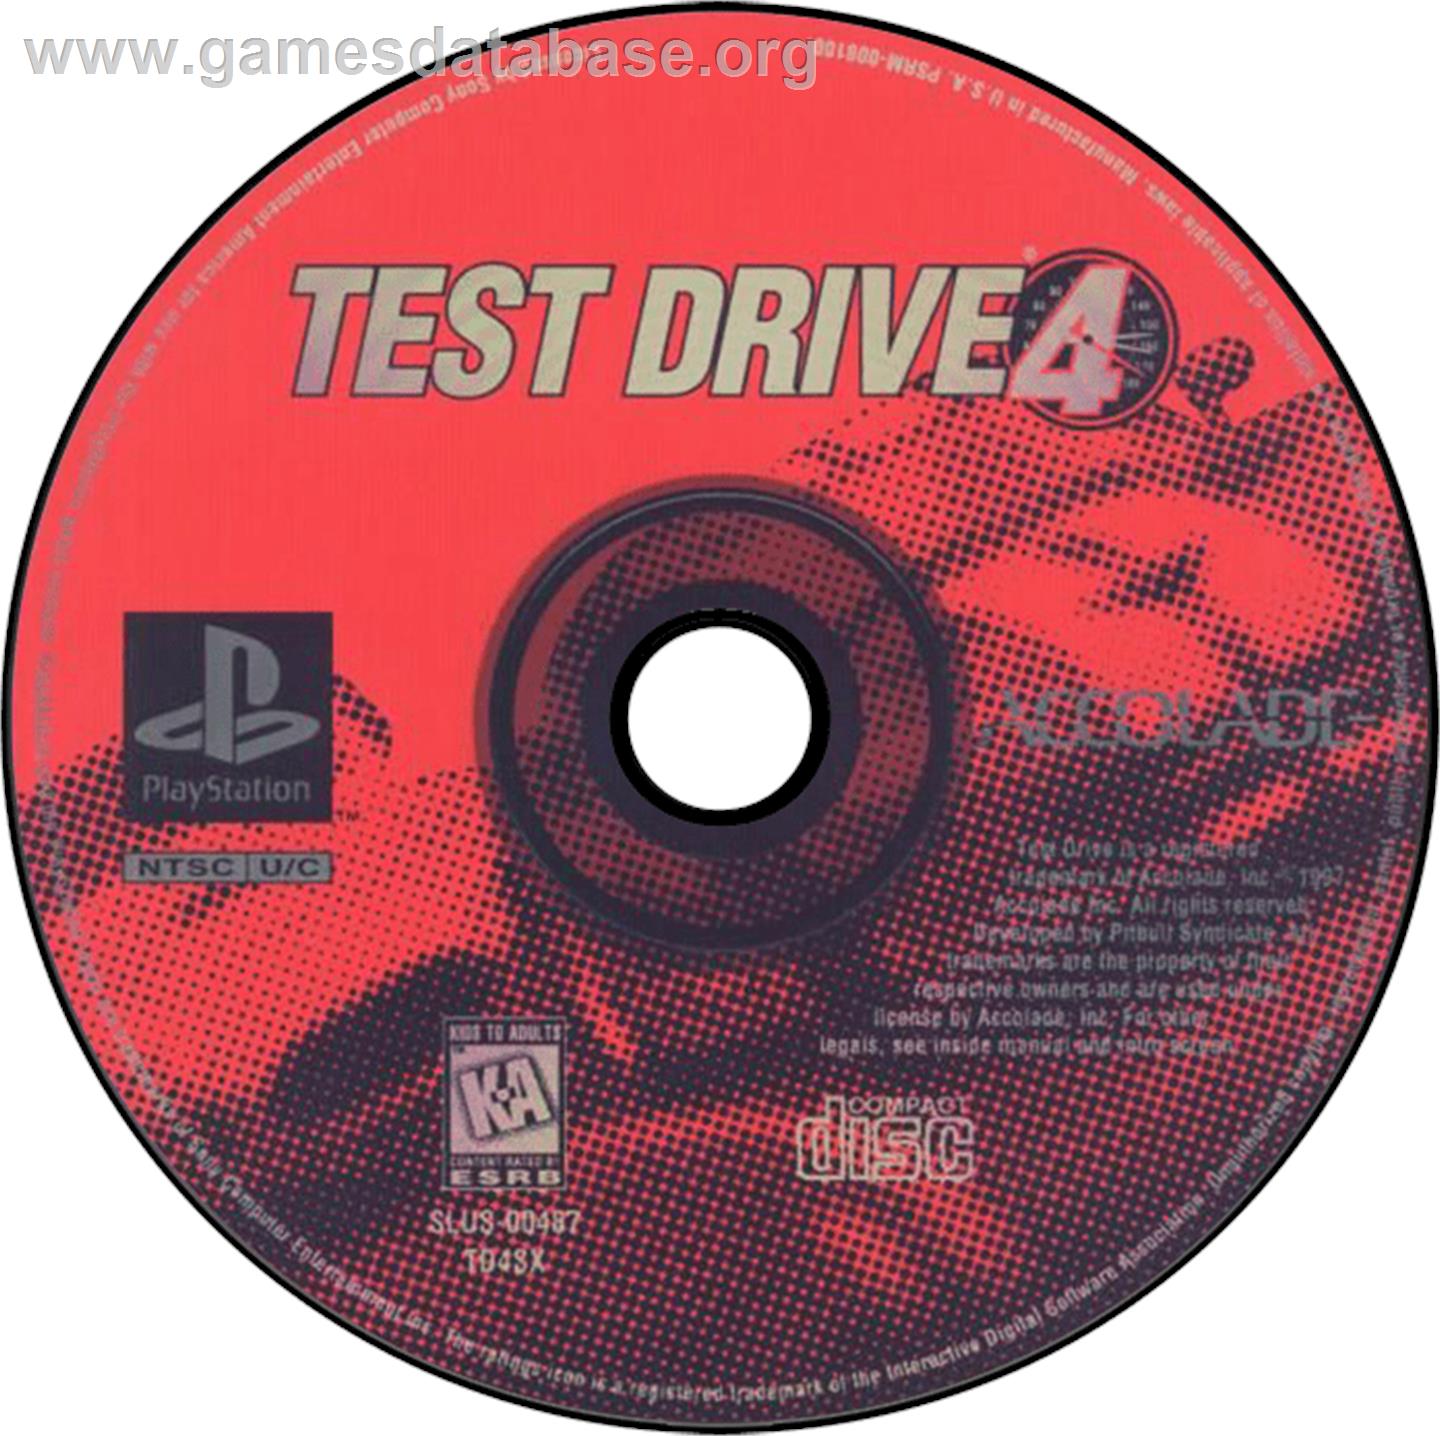 Test Drive 4 - Sony Playstation - Artwork - Disc